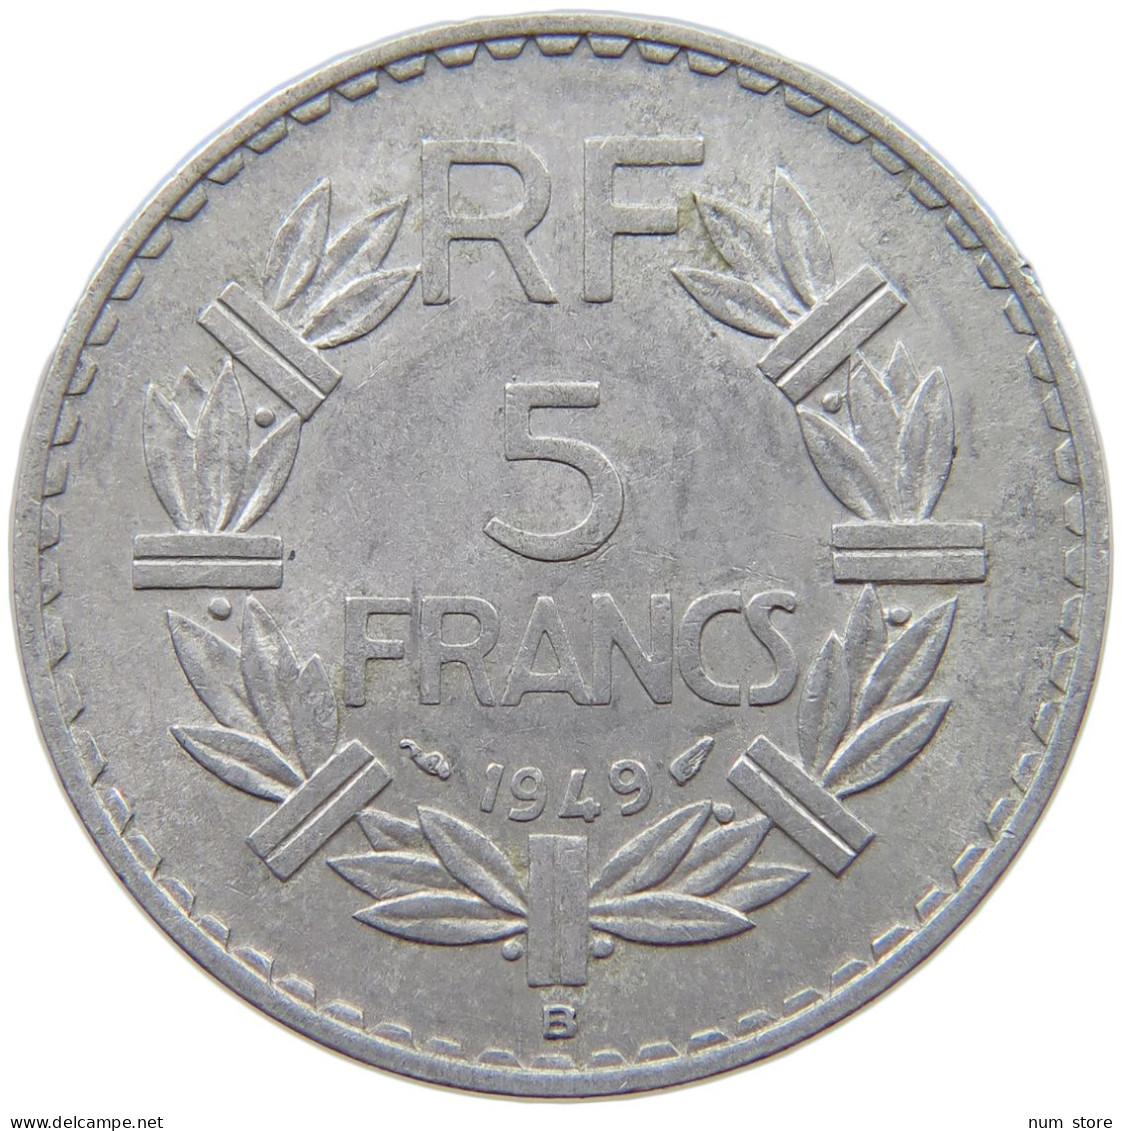 FRANCE 5 FRANCS 1949 B #s068 0793 - 5 Francs